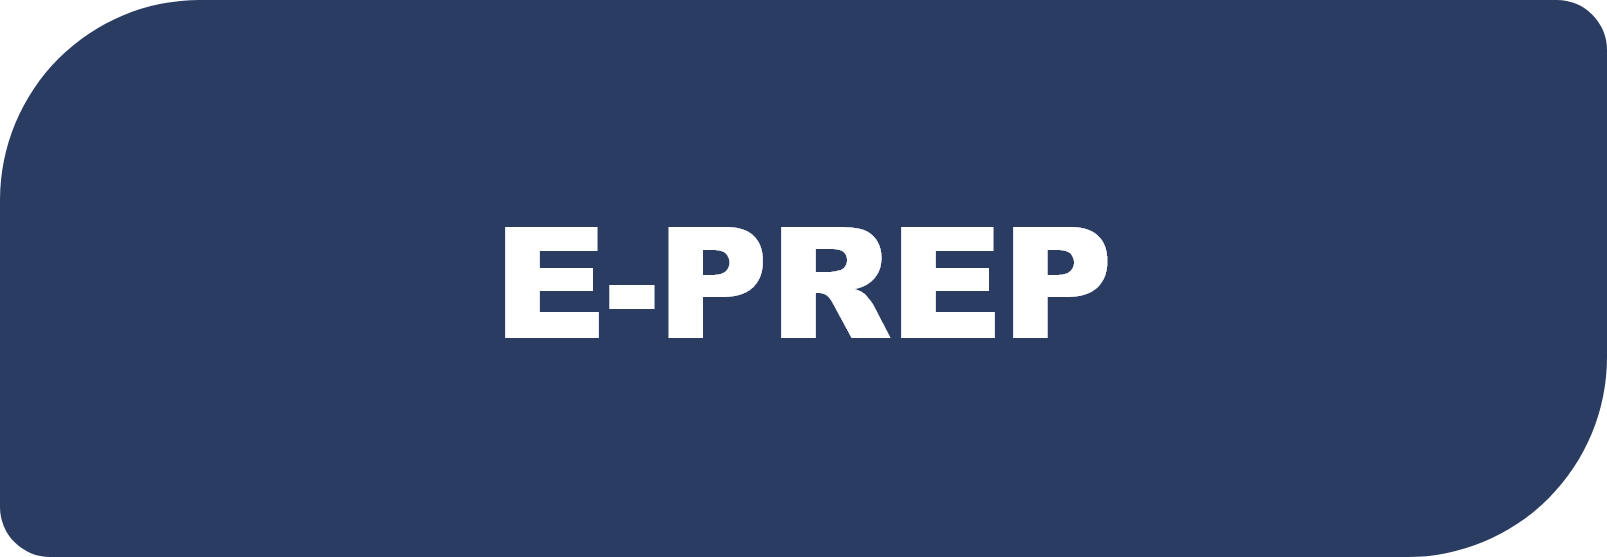 Button that reads: E-PREP